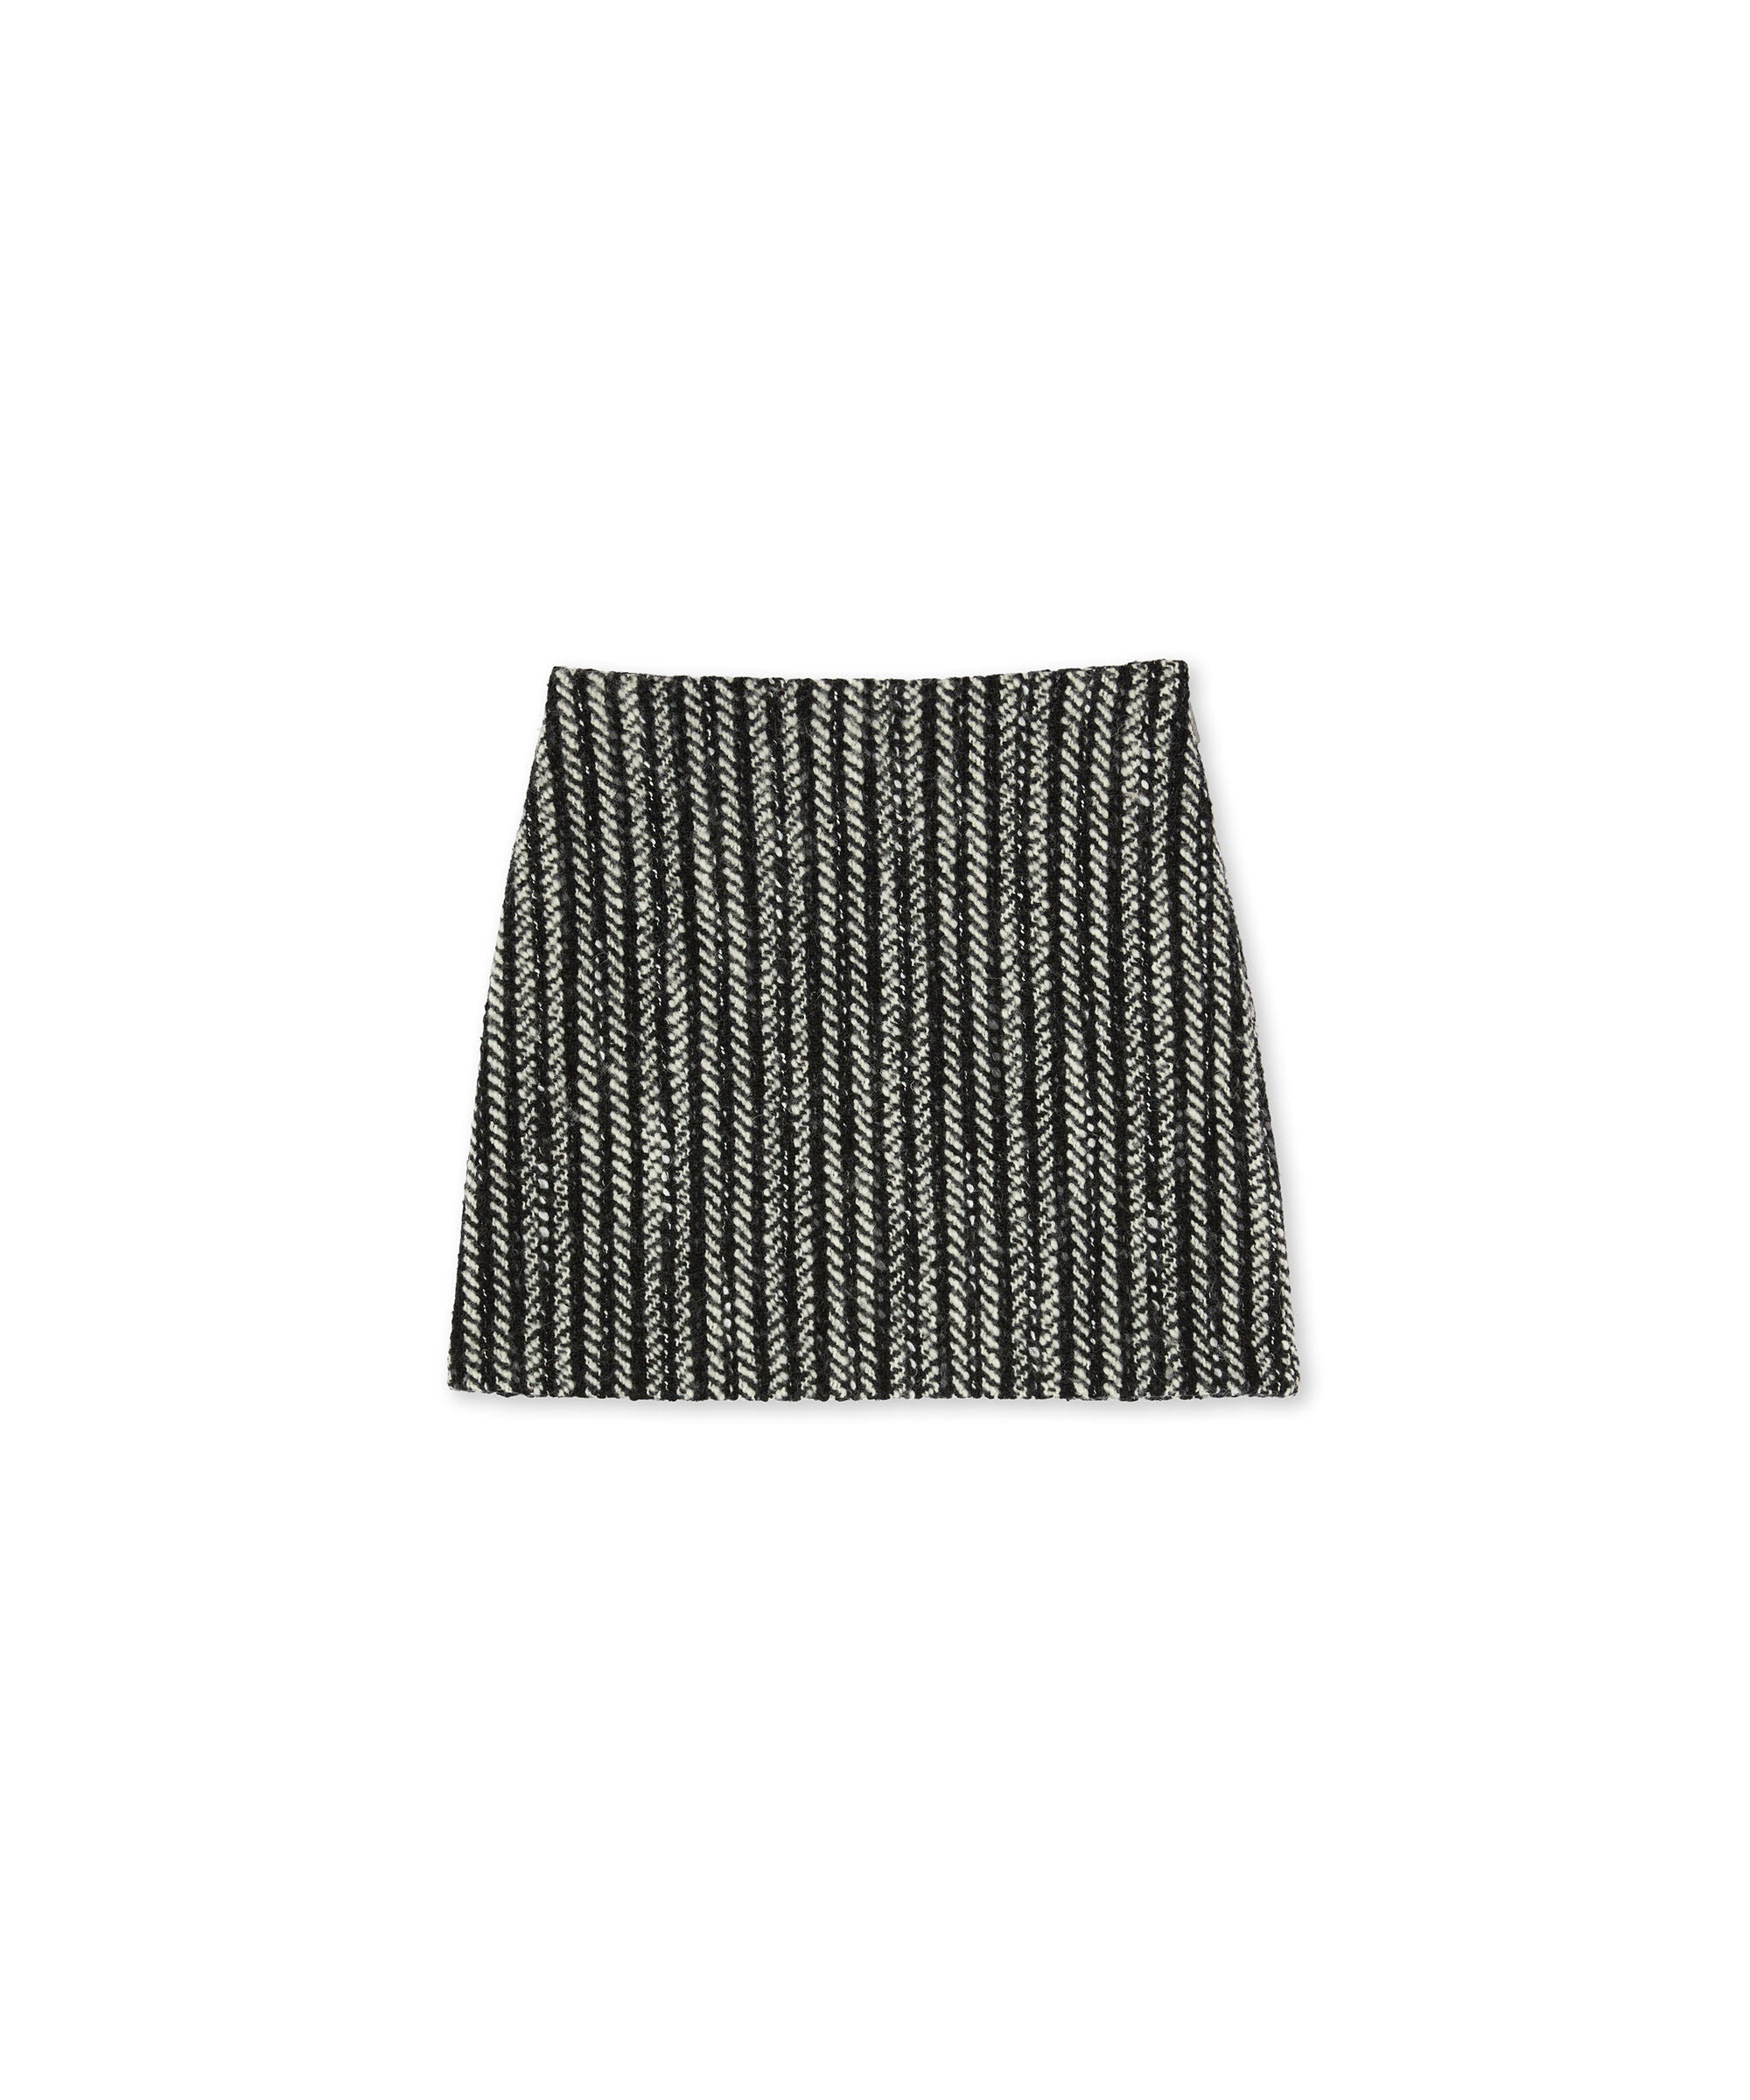 Blended wool "Herringbone Wool felt" mini skirt - 1